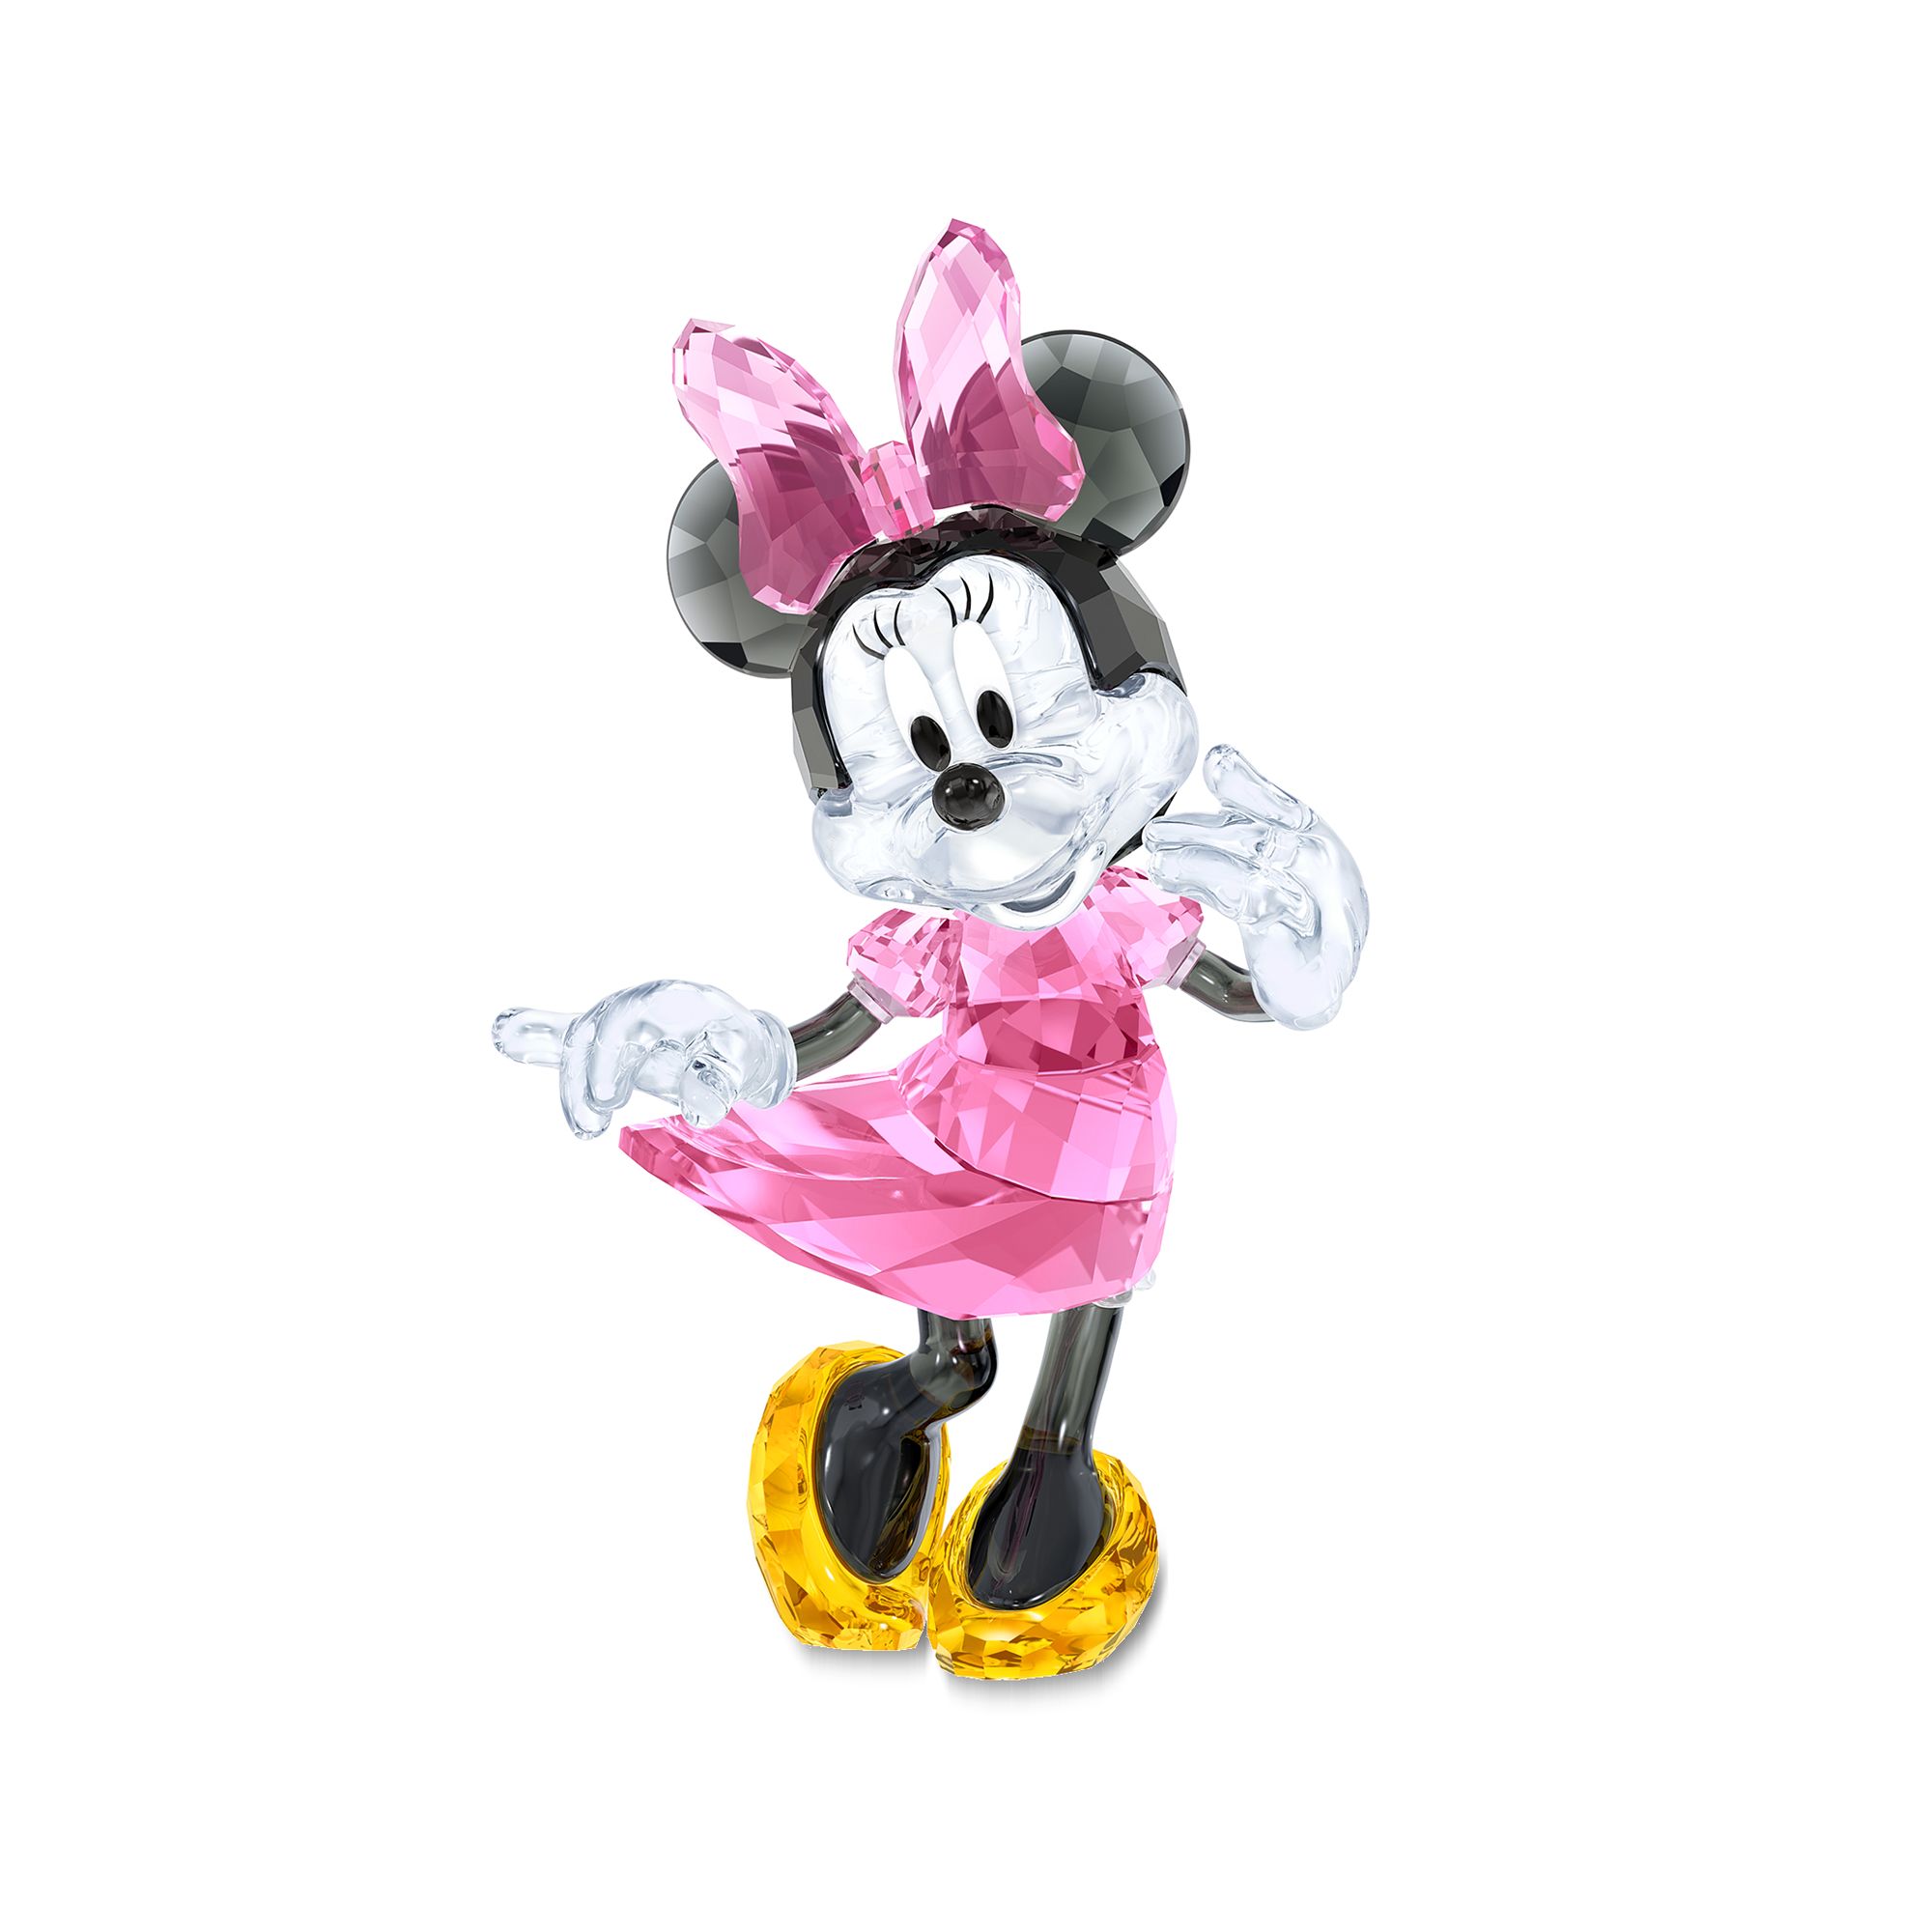 Swarovski Crystal "Disney's Minnie Mouse" Multicolored Crystal Figurine |  Ross-Simons